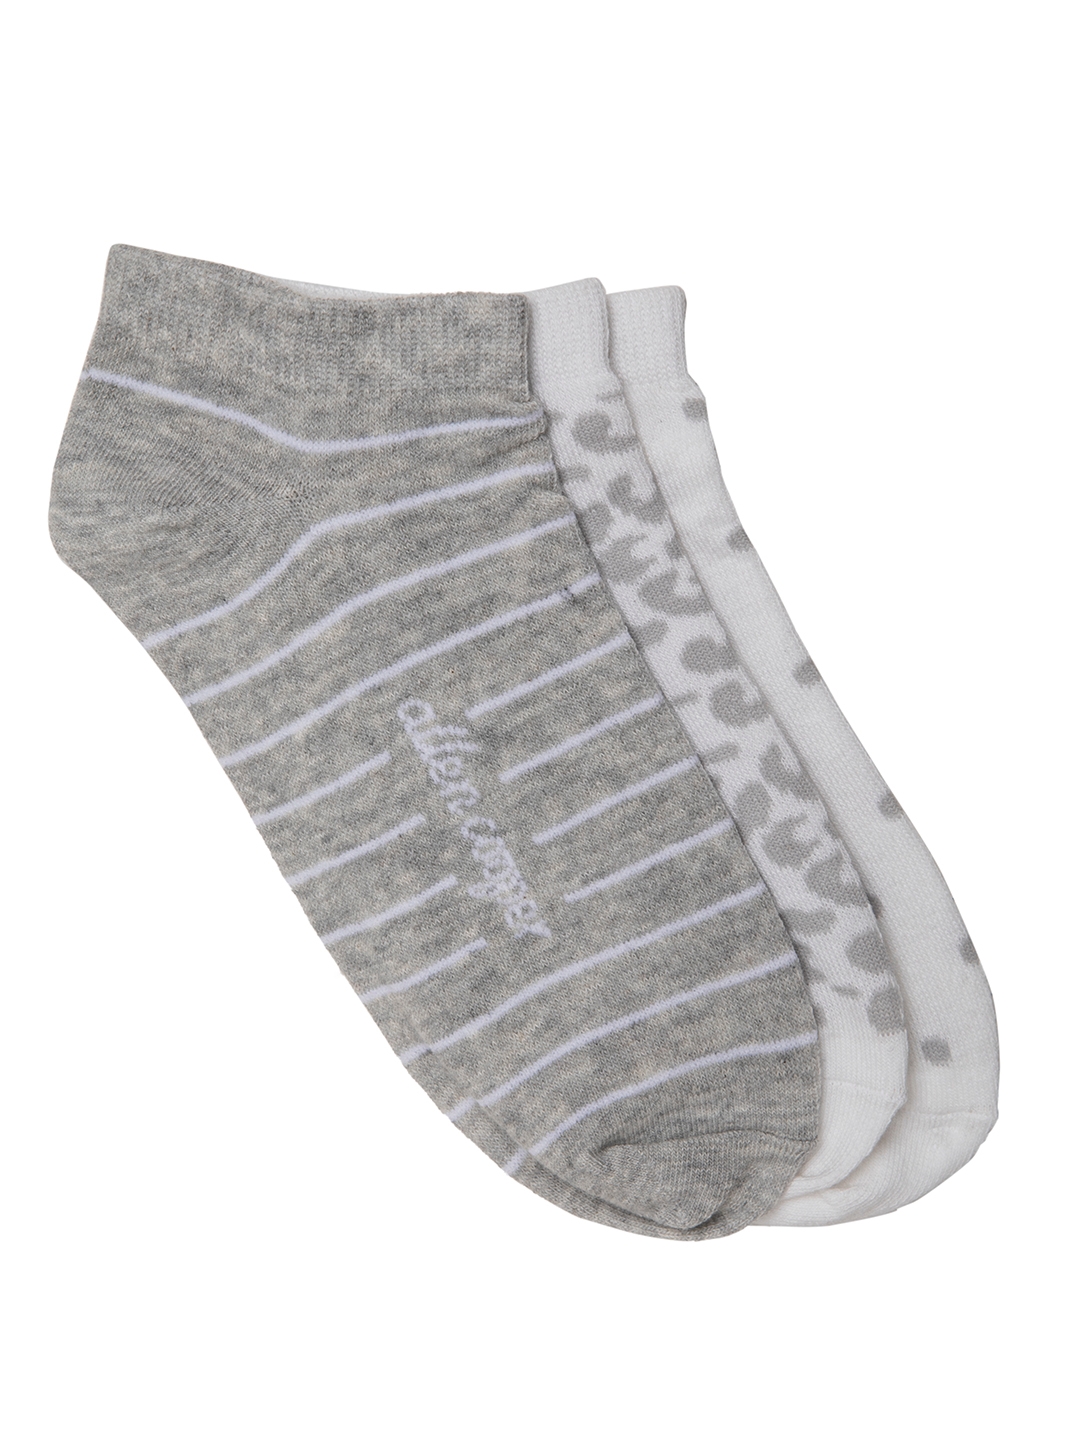 Allen Cooper | Allen Cooper Grey and White Pack of 3 Ankle Socks For Men